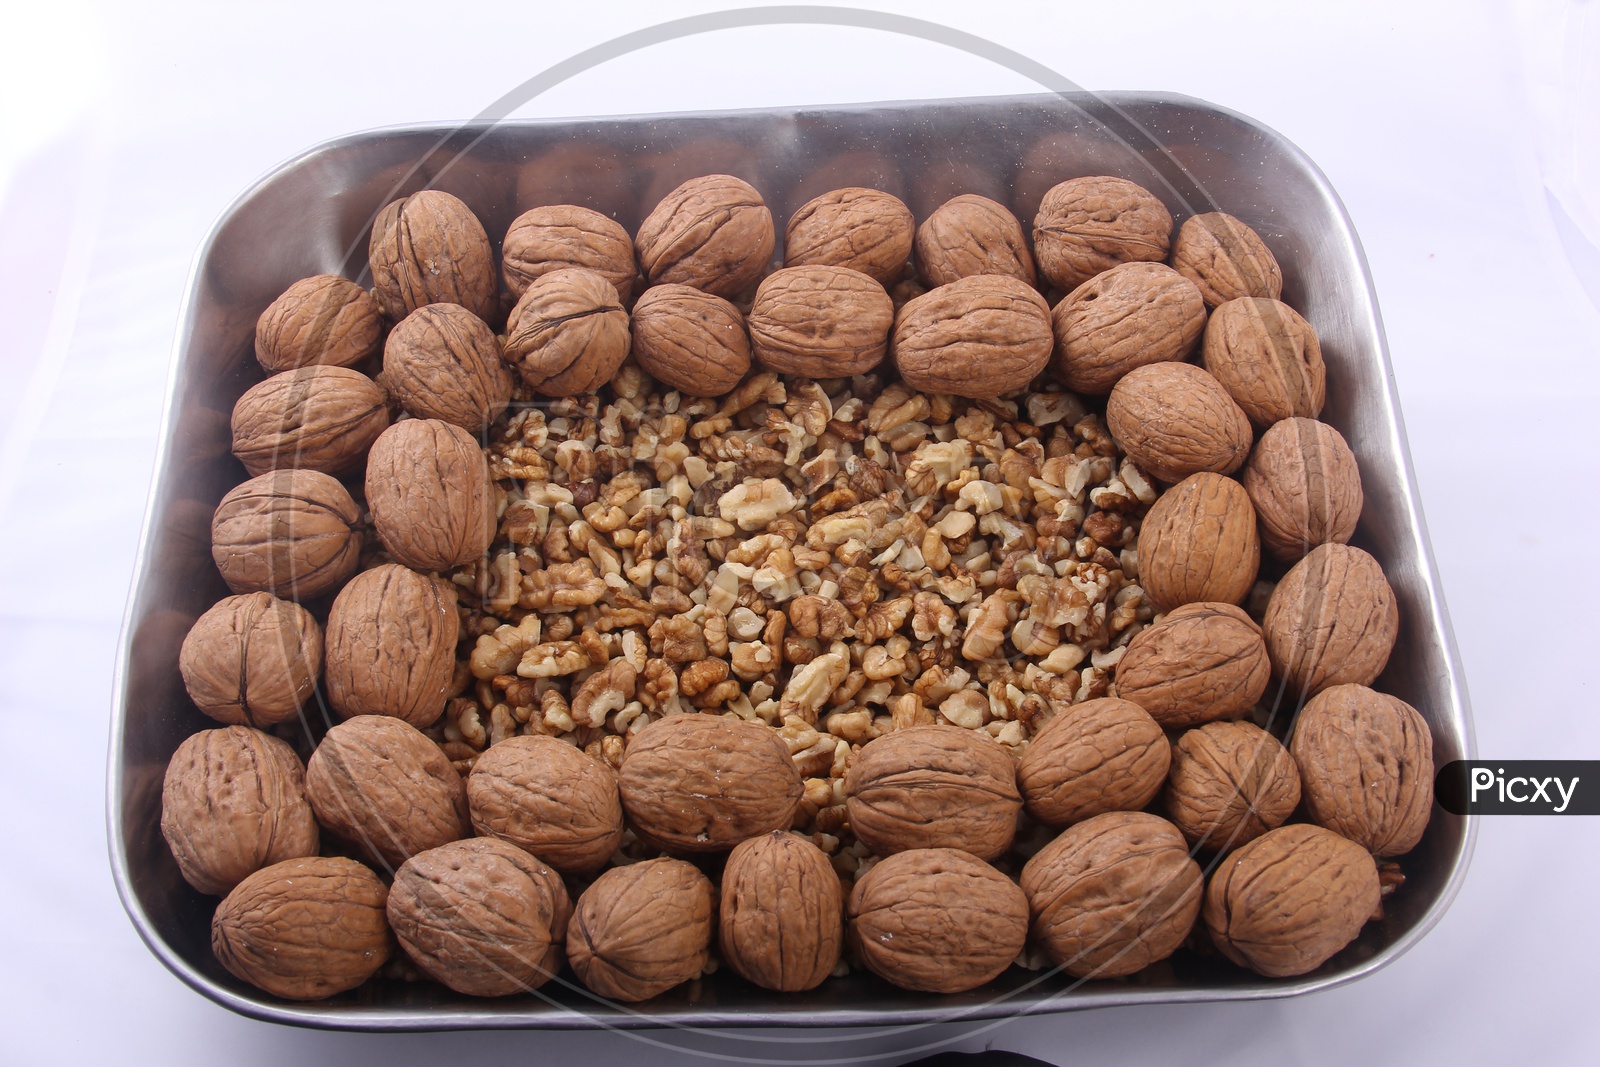 Wallnuts Composition Shot Showing The Texture Of Peeled Wallnuts